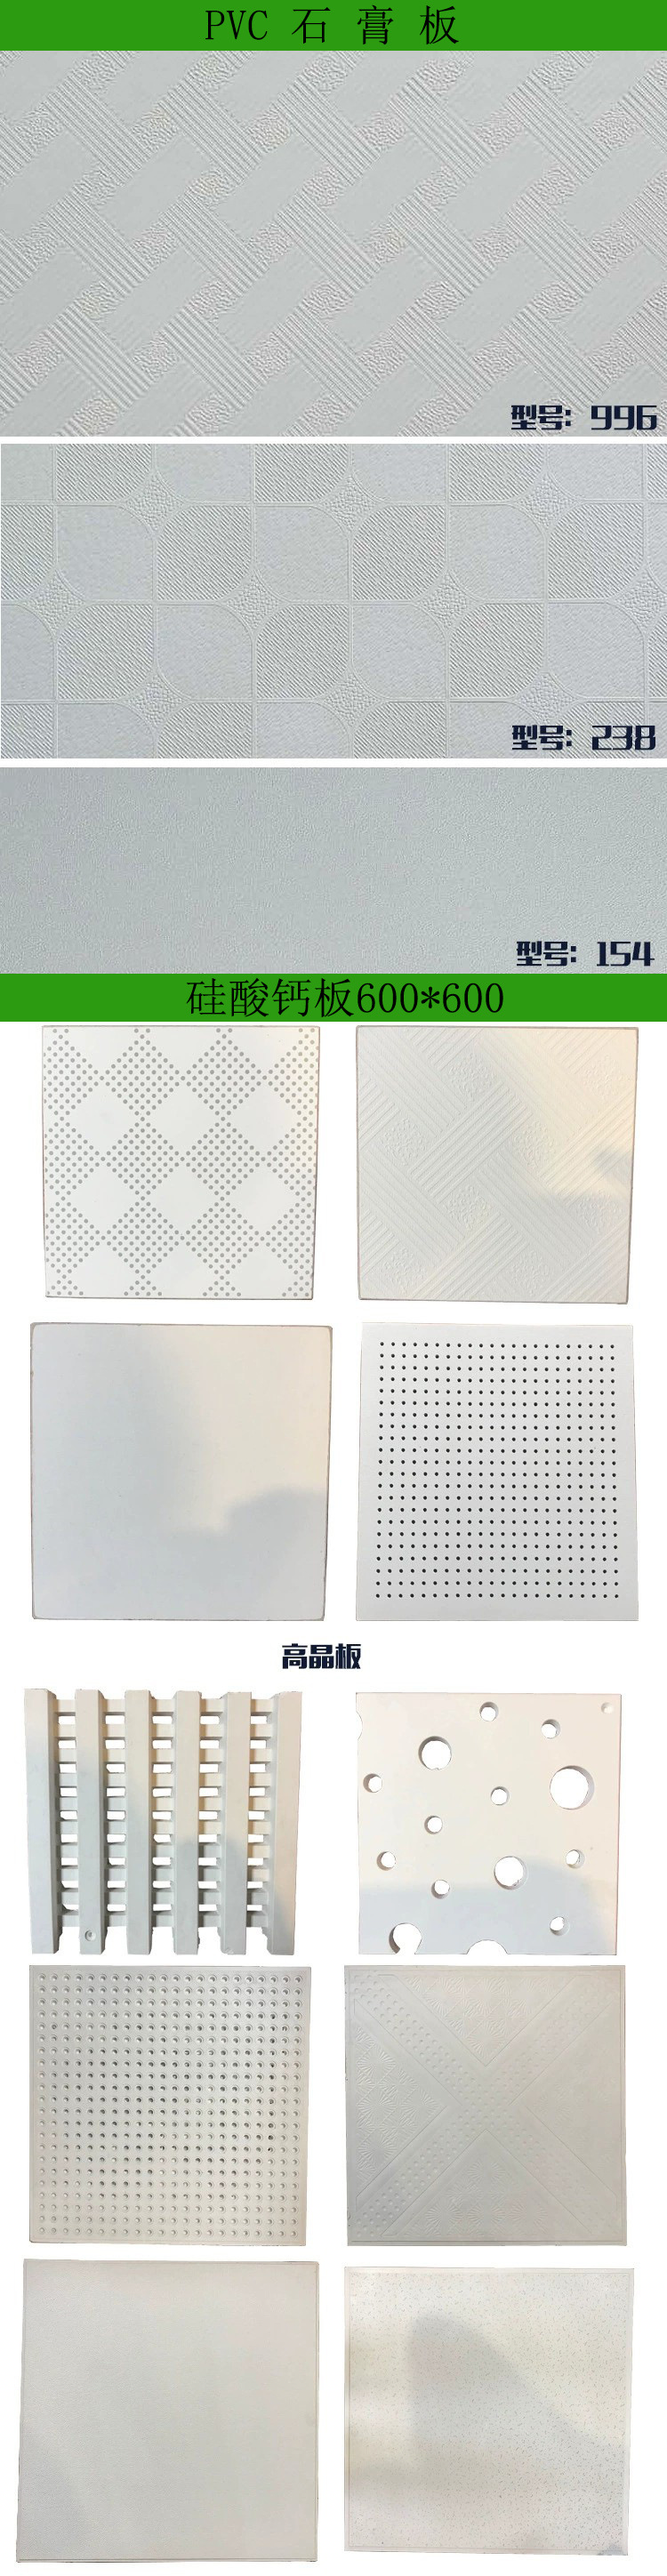 PVC石膏板类型.jpg